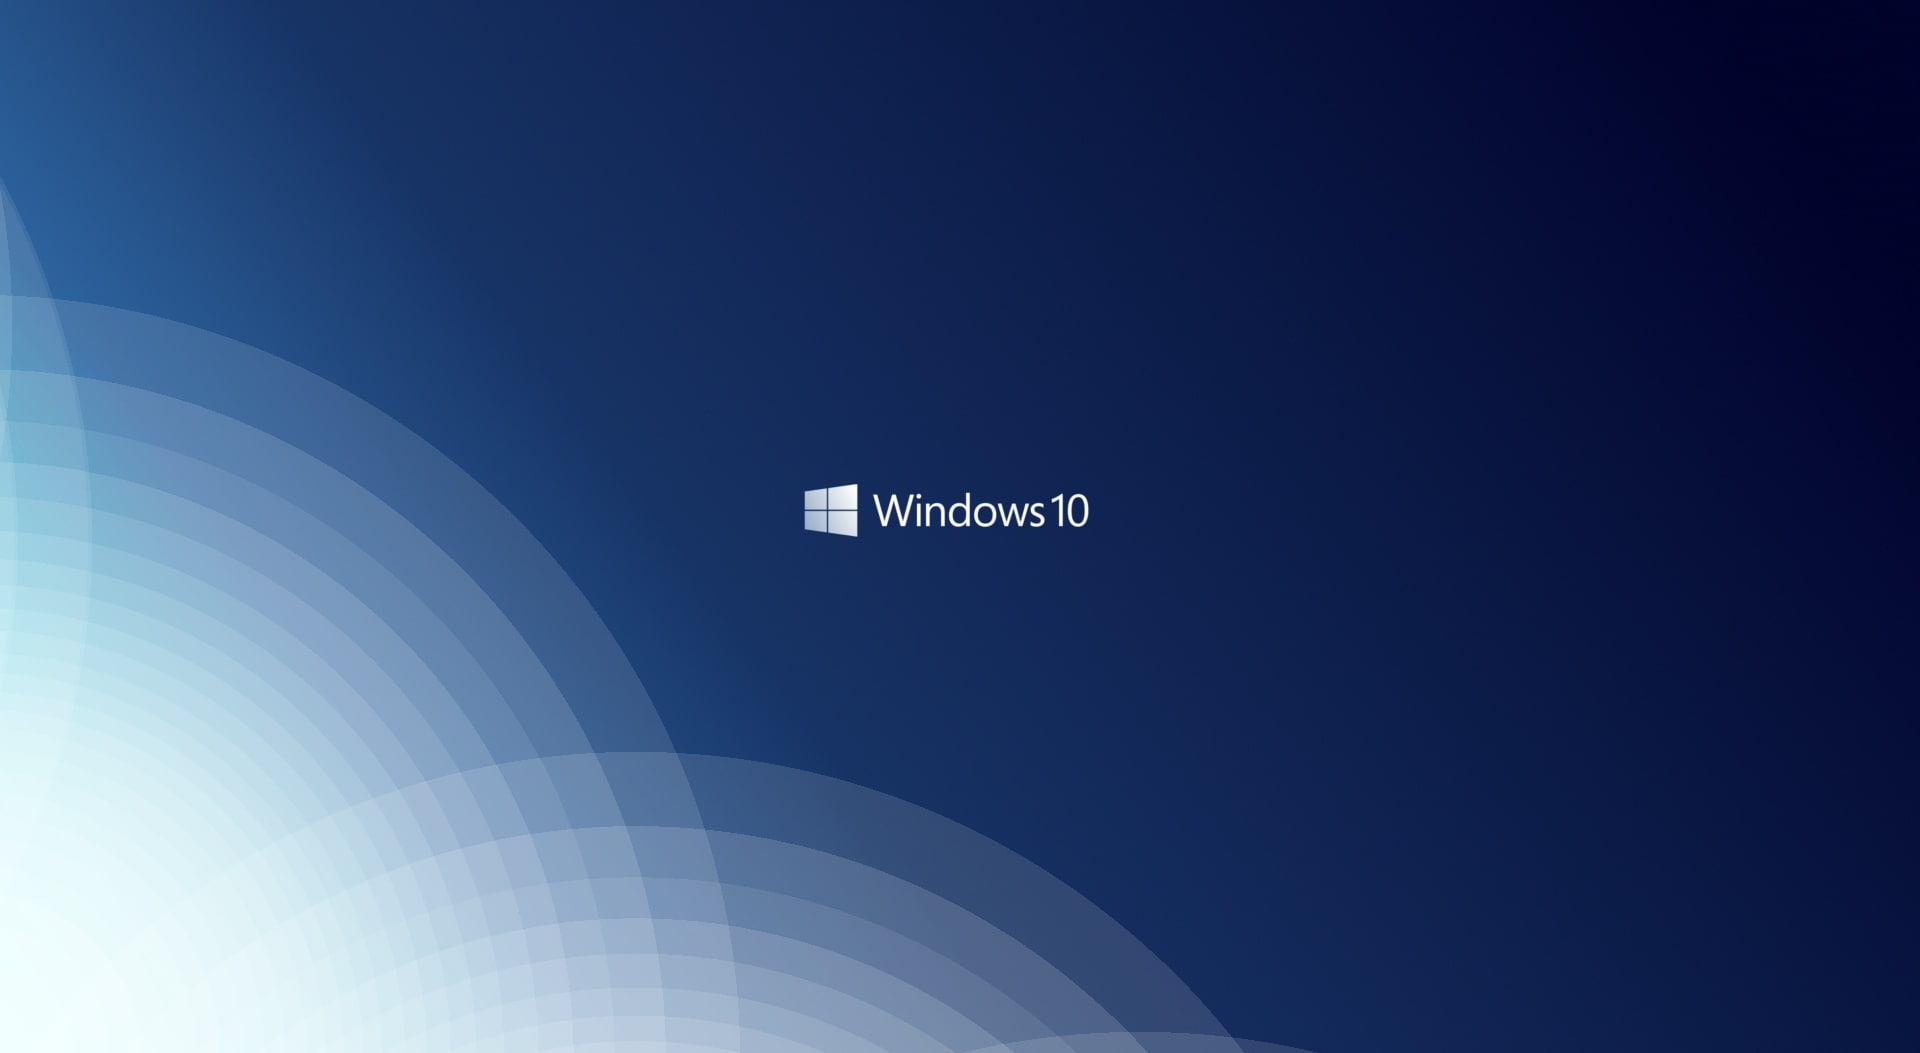 Windows 10, Windows 10 logo, minimal, minimalism, minimalistic